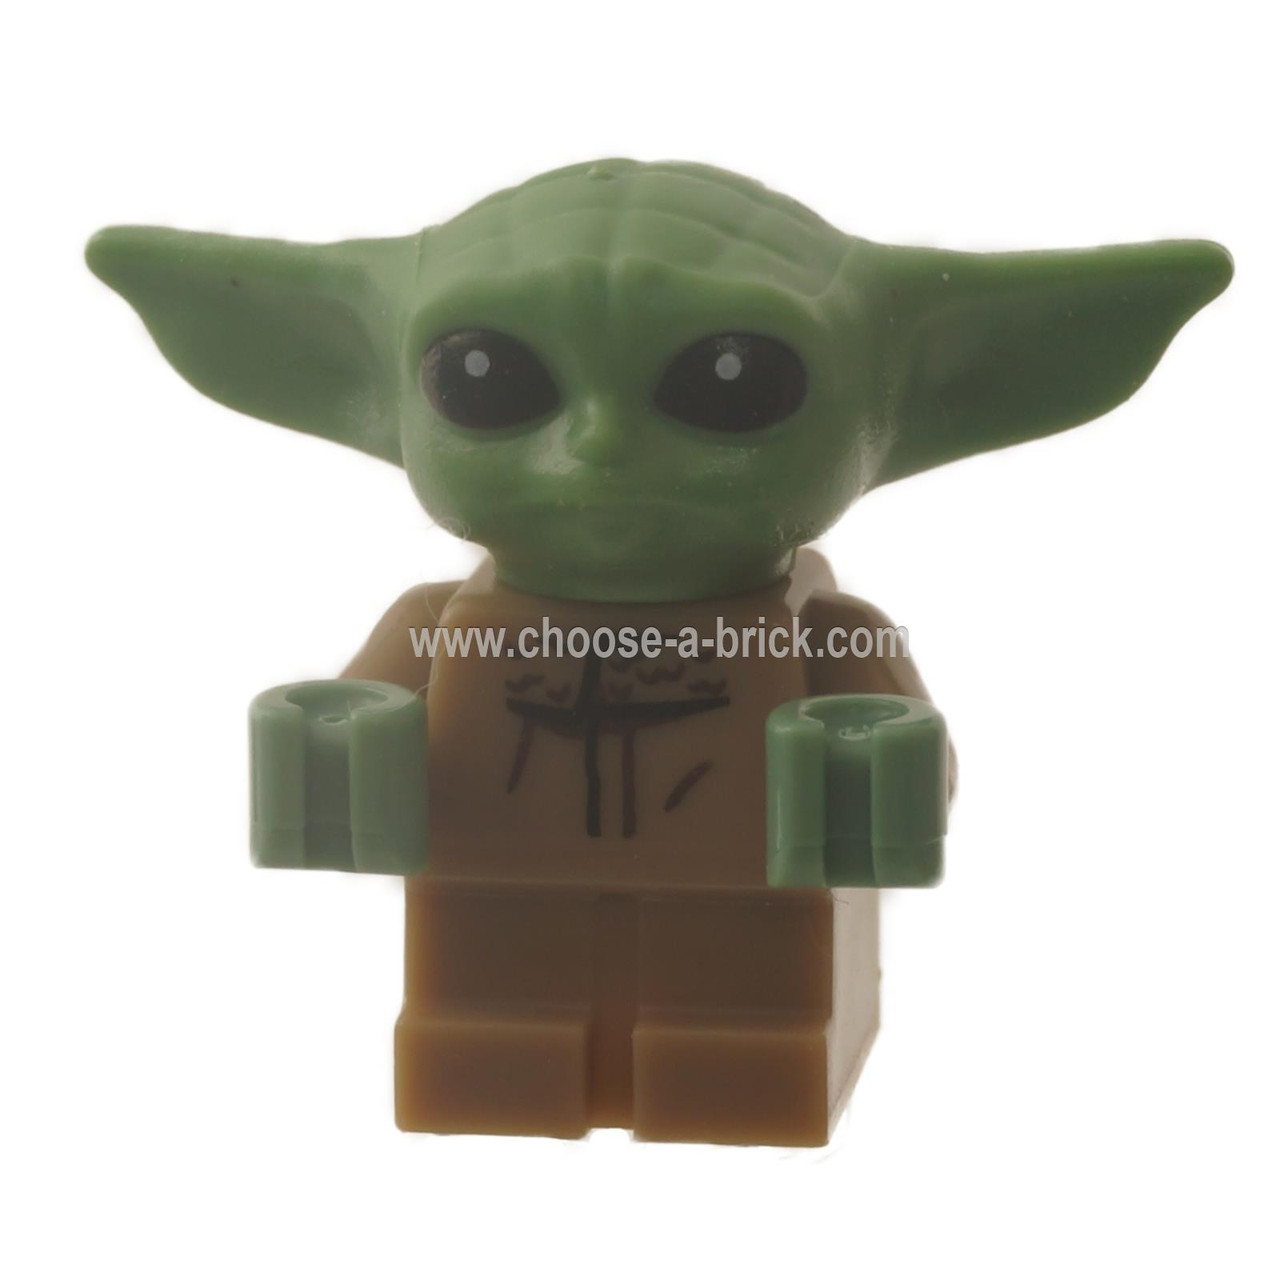 LEGO Star Wars: Mando Minifigure with Grogu (Baby Yoda) Very